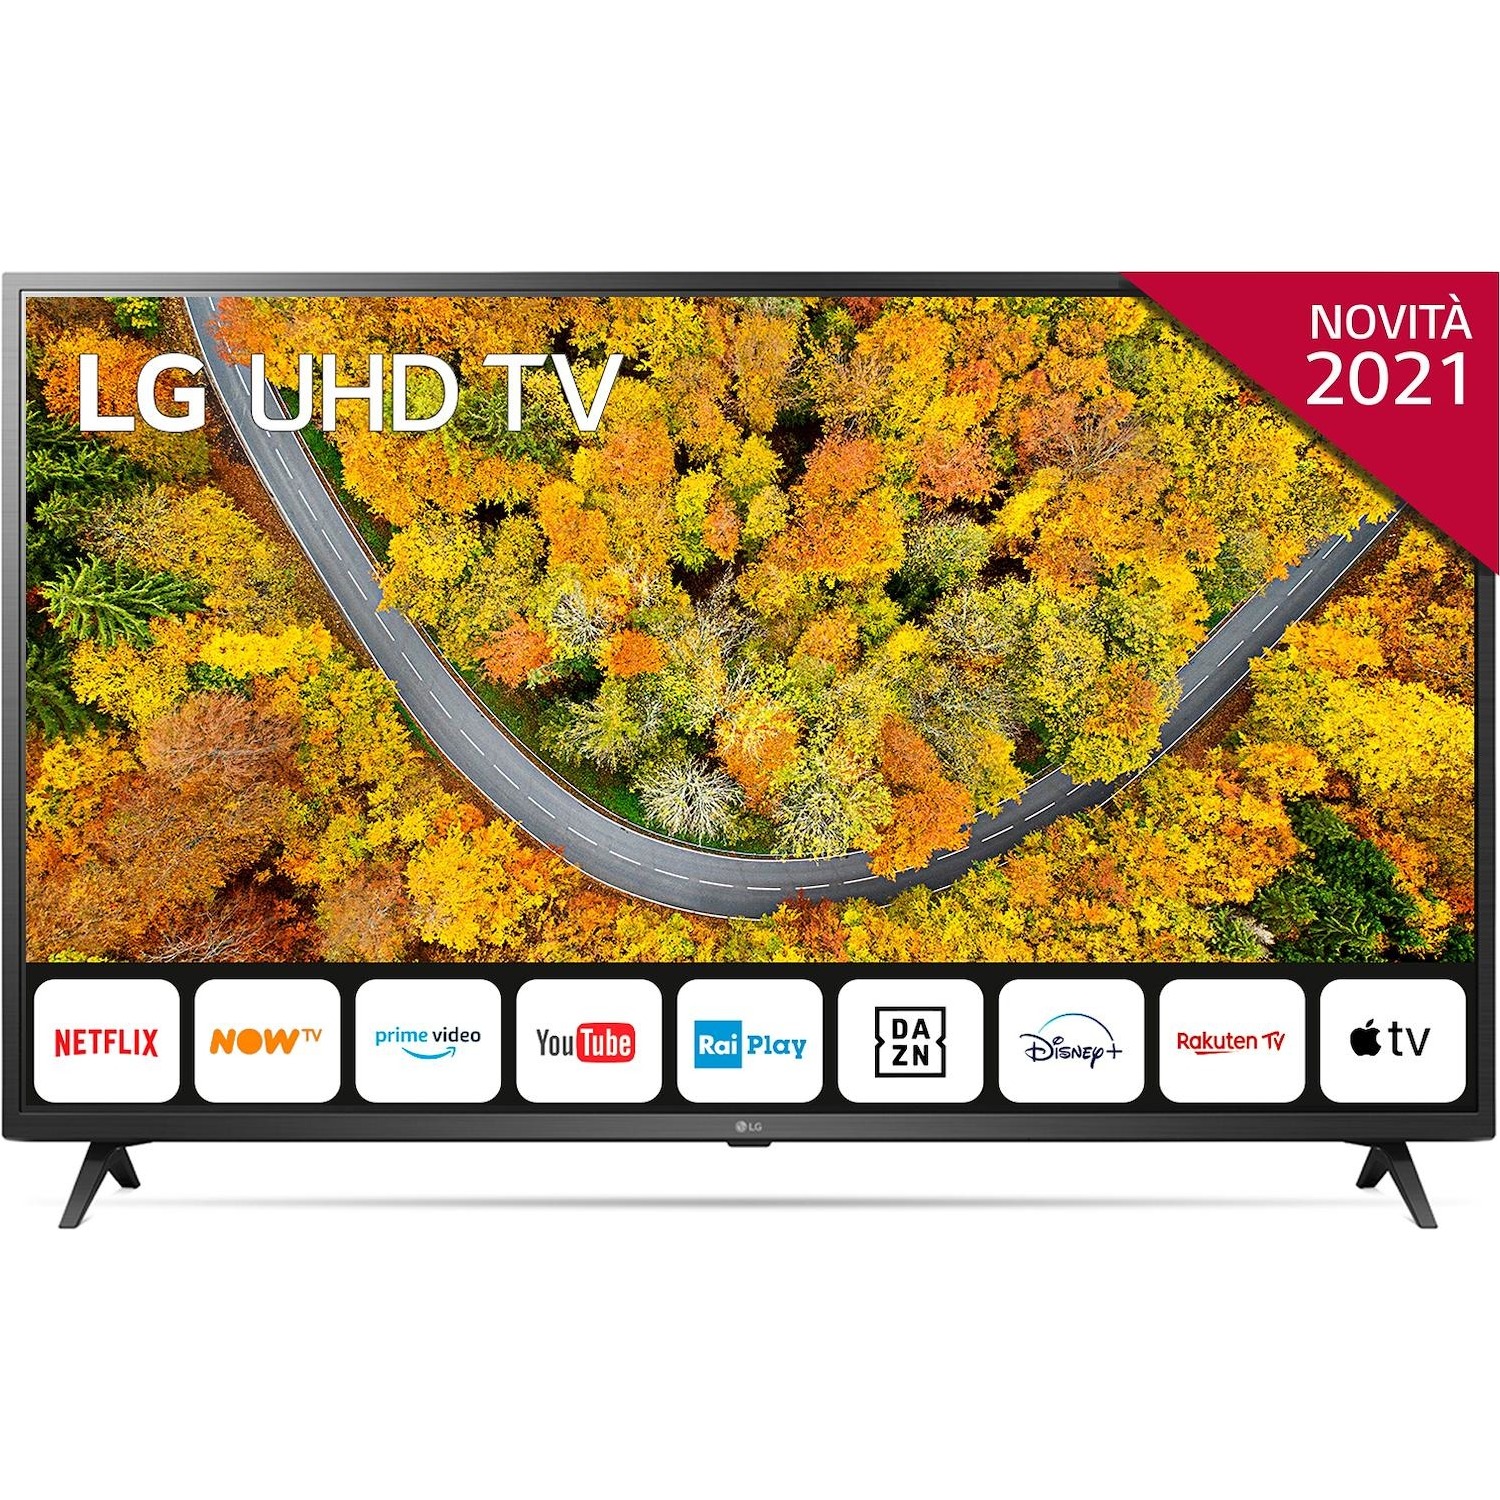 Immagine per TV LED Smart 4K UHD LG 55UP75006 da DIMOStore